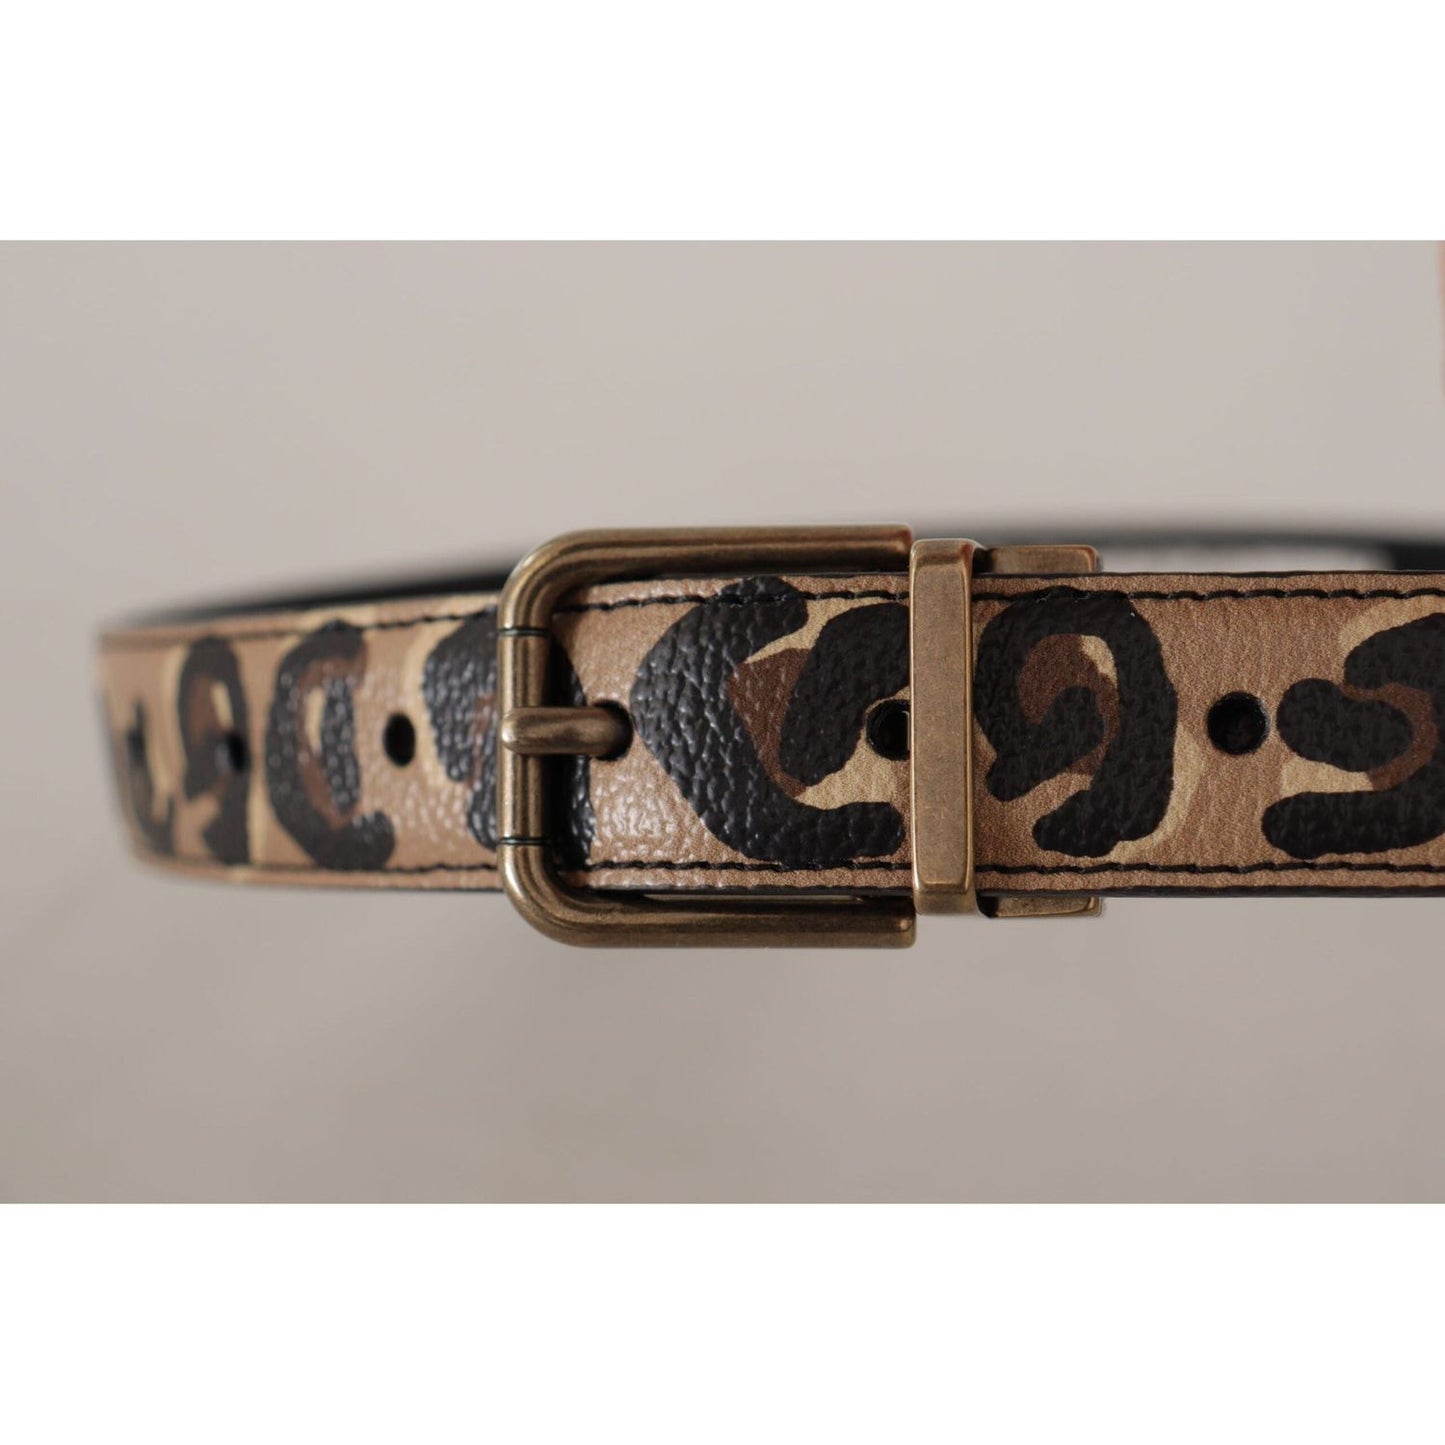 Dolce & Gabbana Chic Engraved Logo Leather Belt brown-leather-leopard-print-bronze-metal-buckle-belt IMG_8970-1-scaled-46c881d5-6b8.jpg